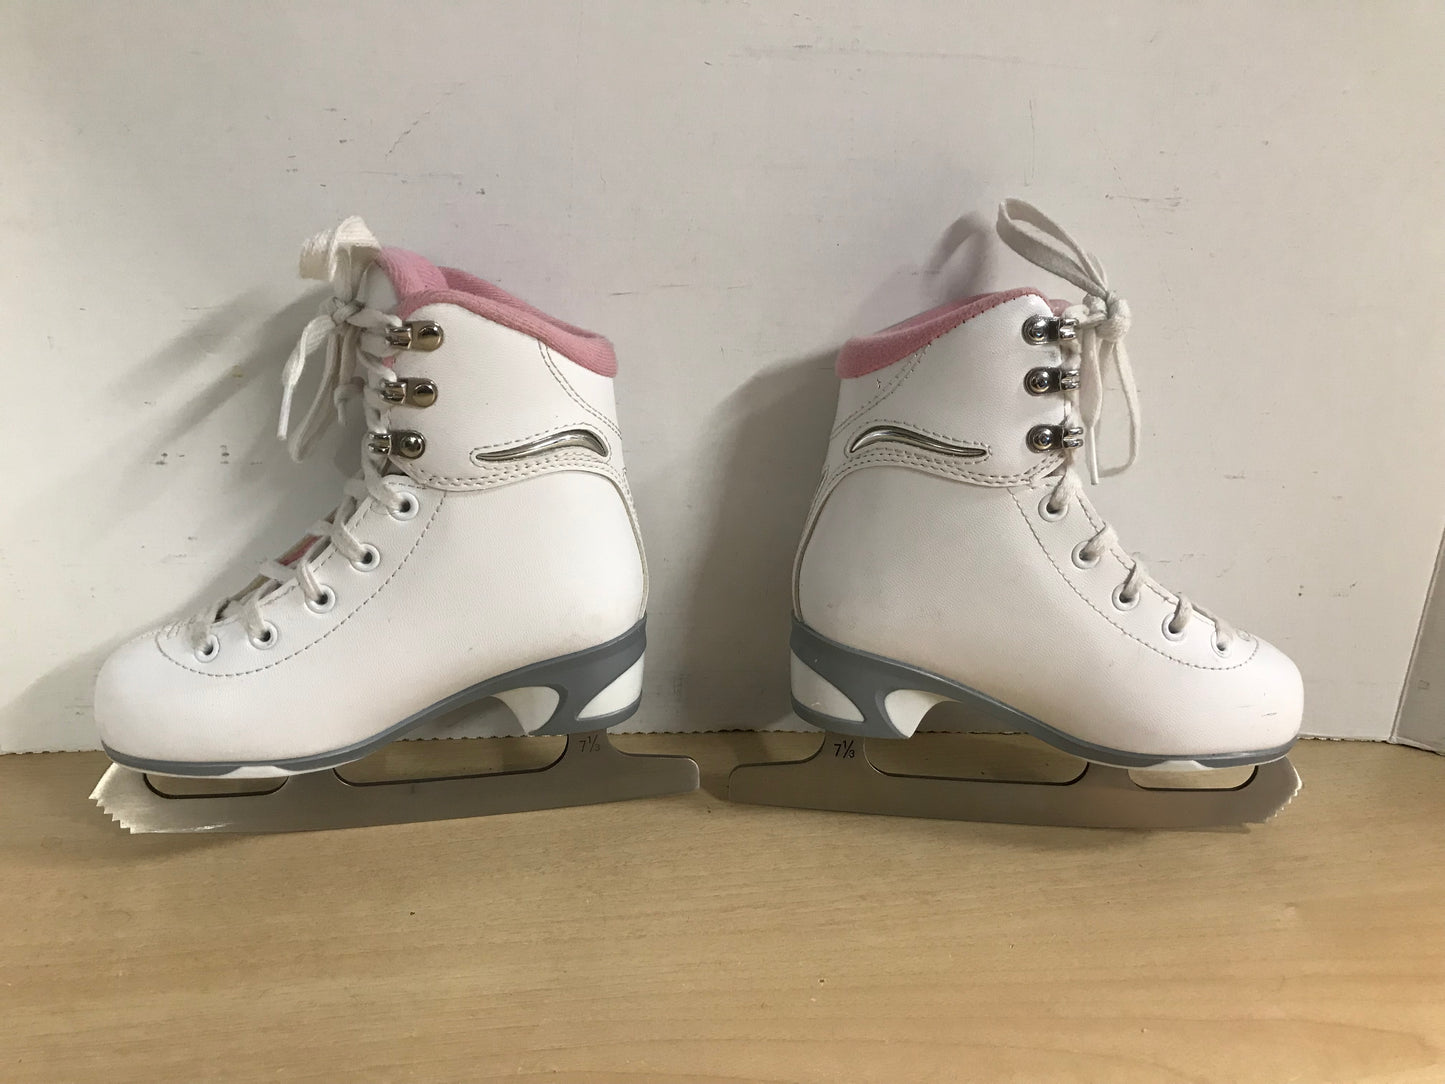 Figure Skates Child Size 12 Jackson Cameo Soft Skates White Pink New Demo Model